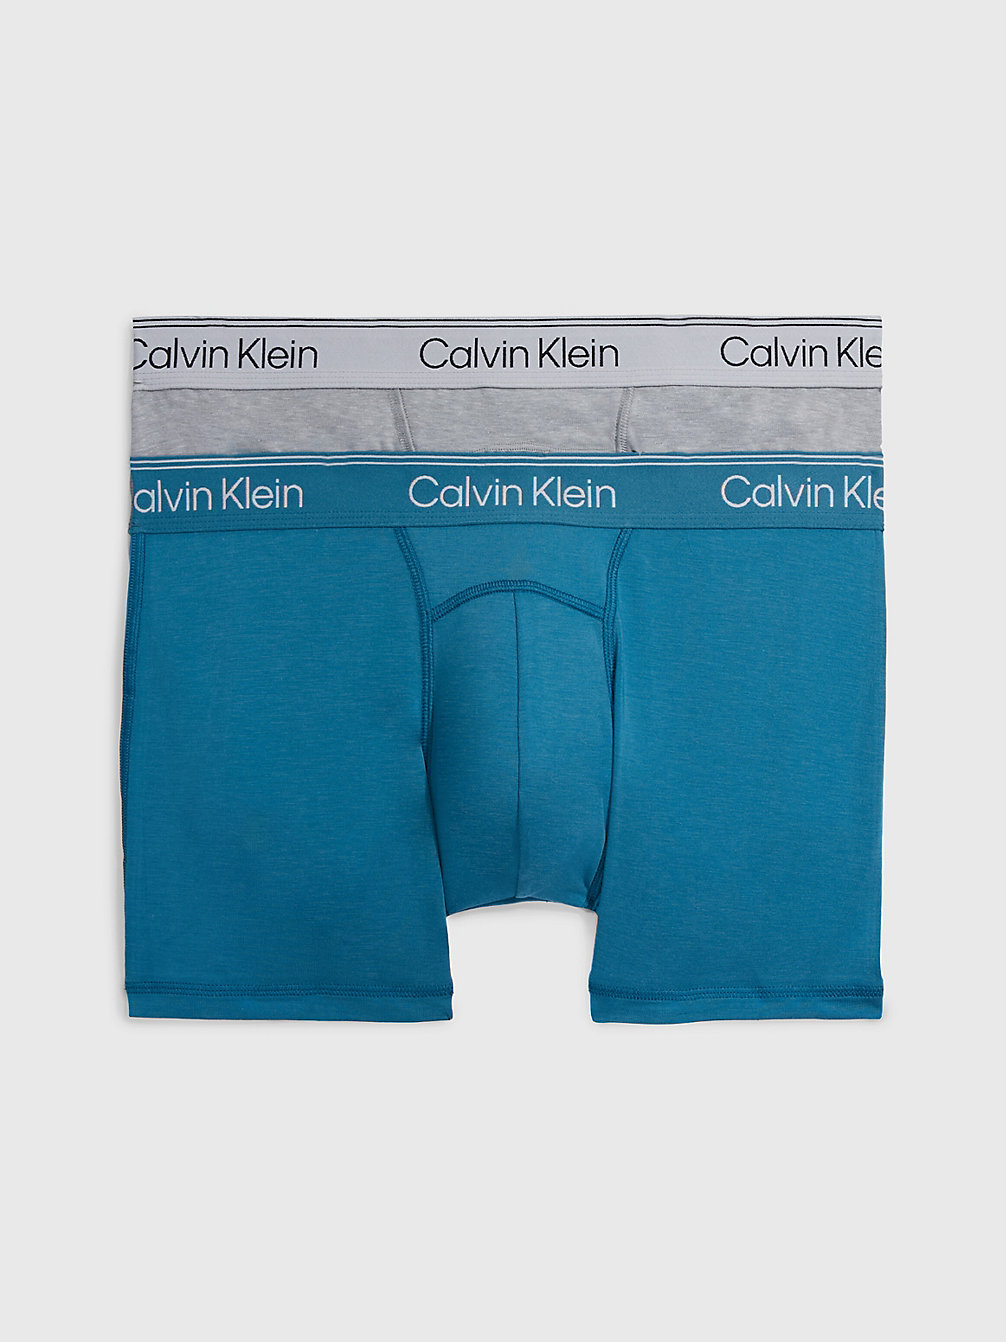 MIDNIGHT, ATHLETIC GREY HEATHER 2 Pack Trunks - Athletic Cotton undefined men Calvin Klein